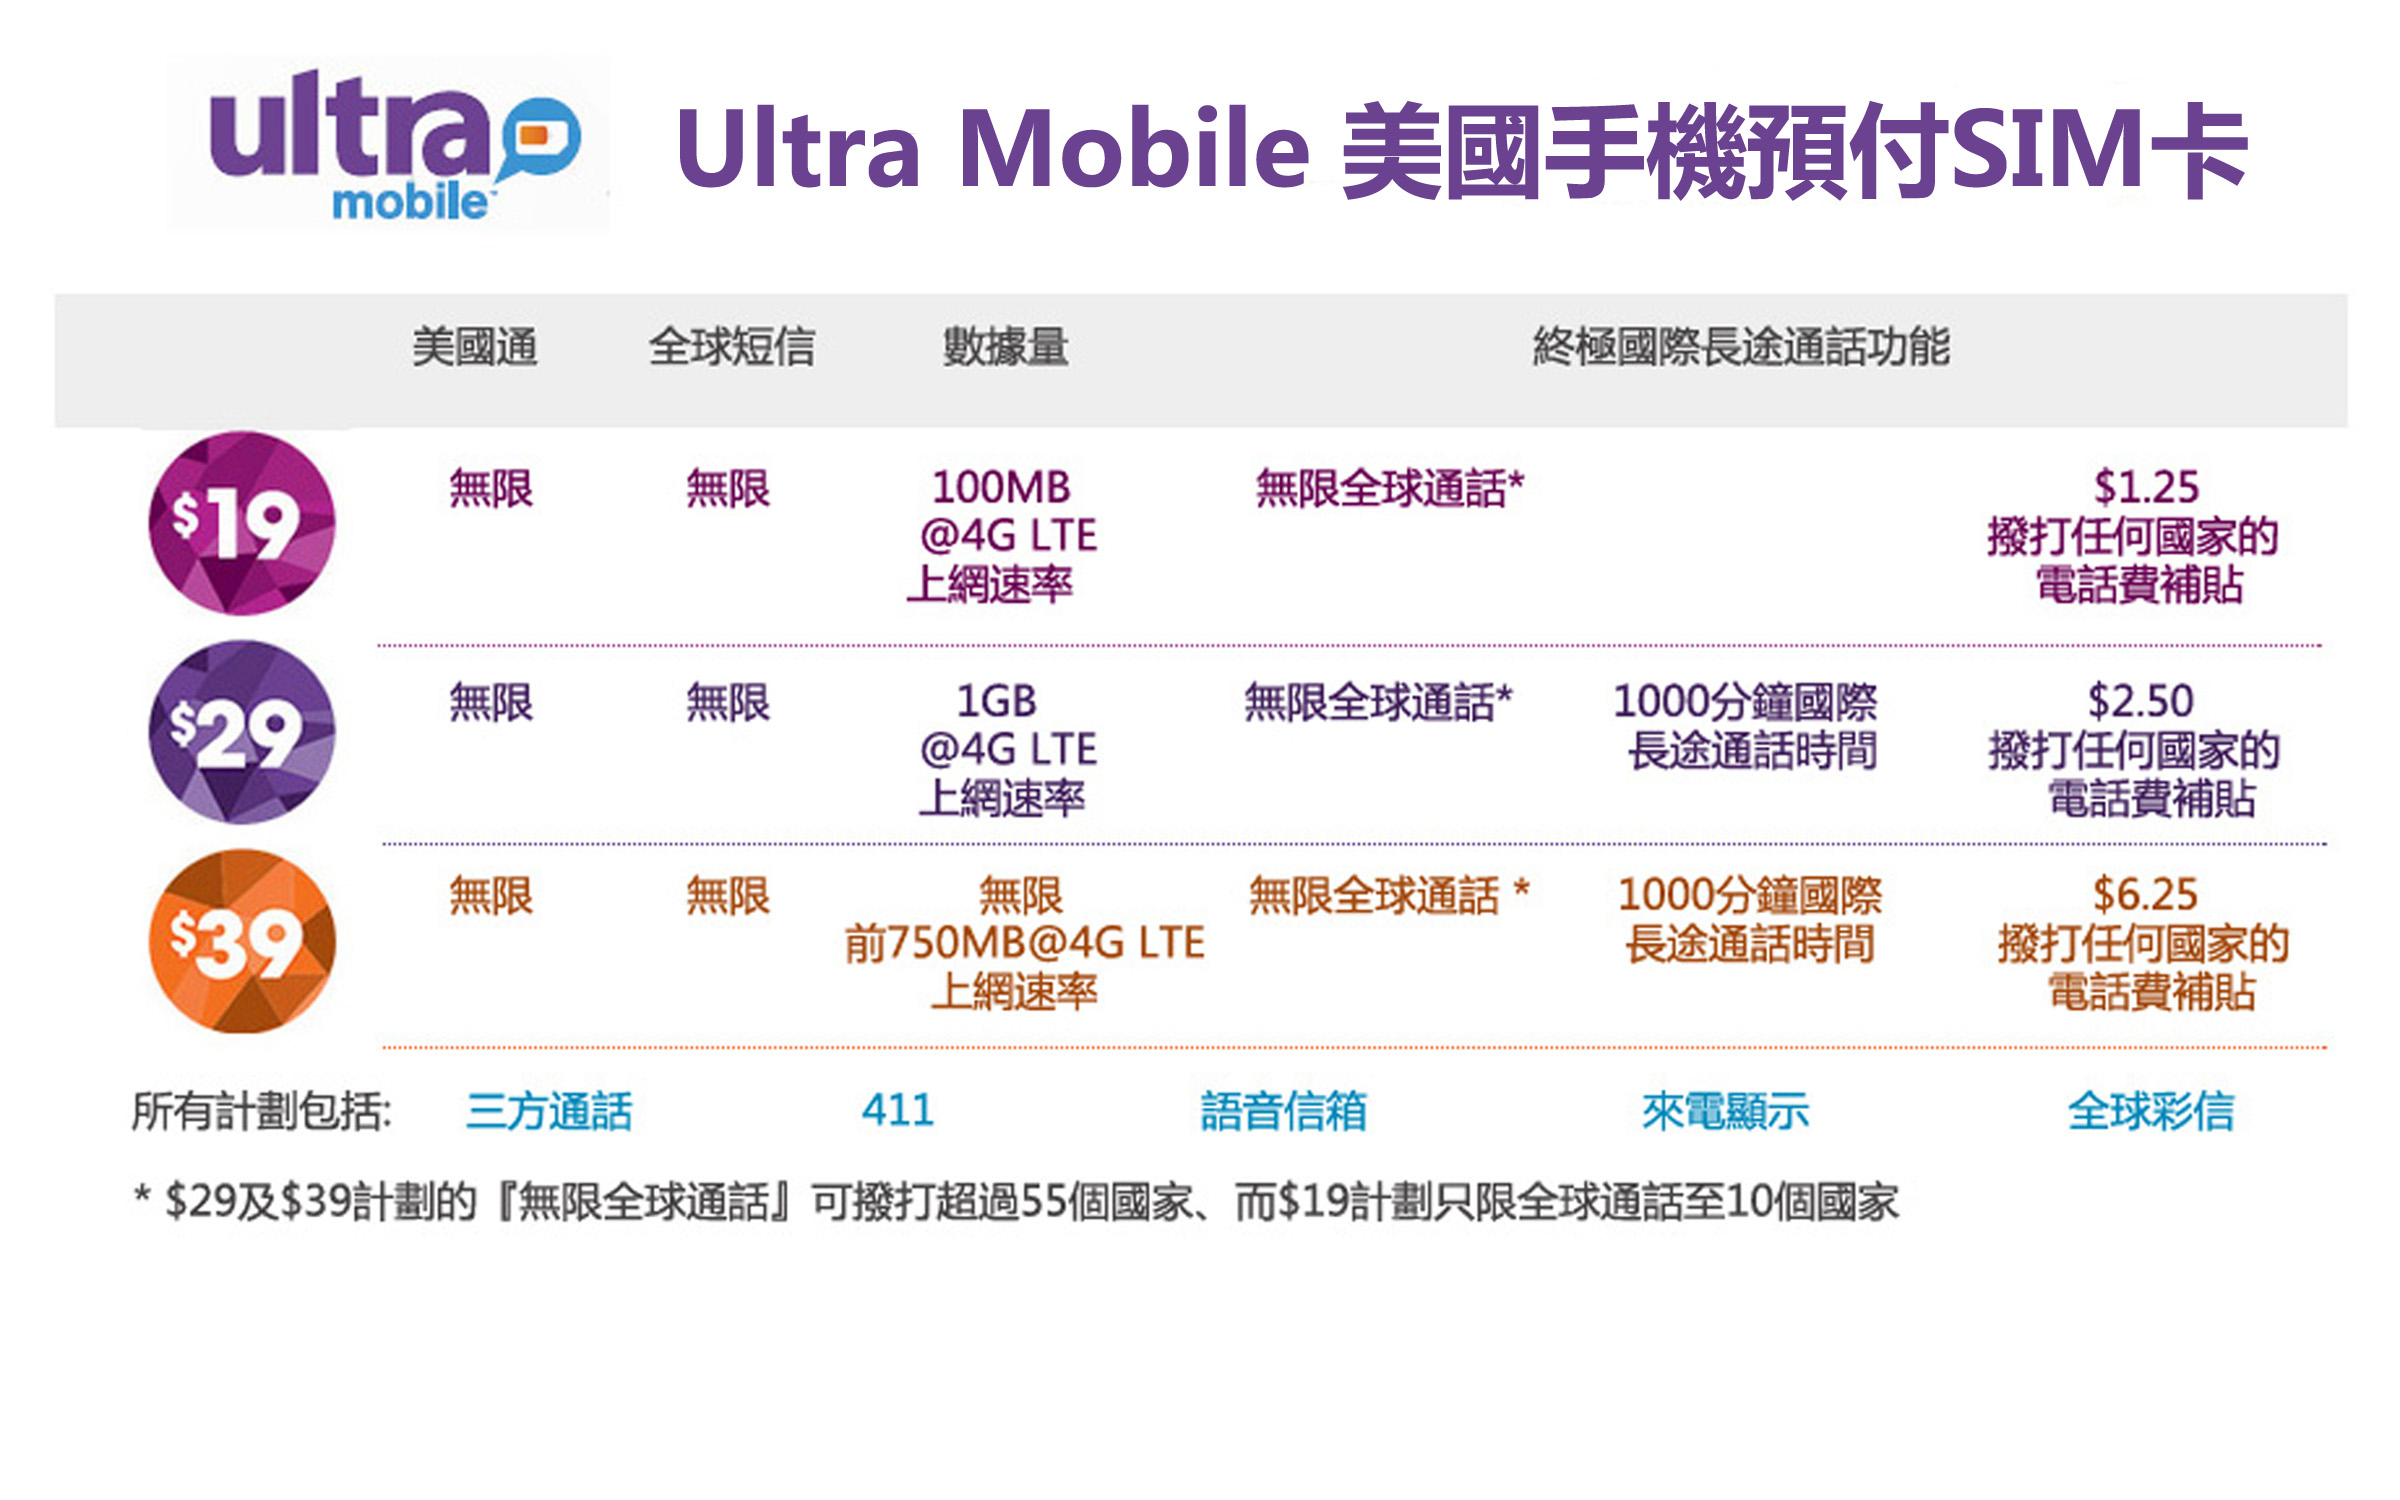 ComNet Telecom：Ultra Mobile USA 美國手提電話預付包月卡只需$24 (免簽合約 + 任傾任講 + 數據服務) + 免費China One電話卡